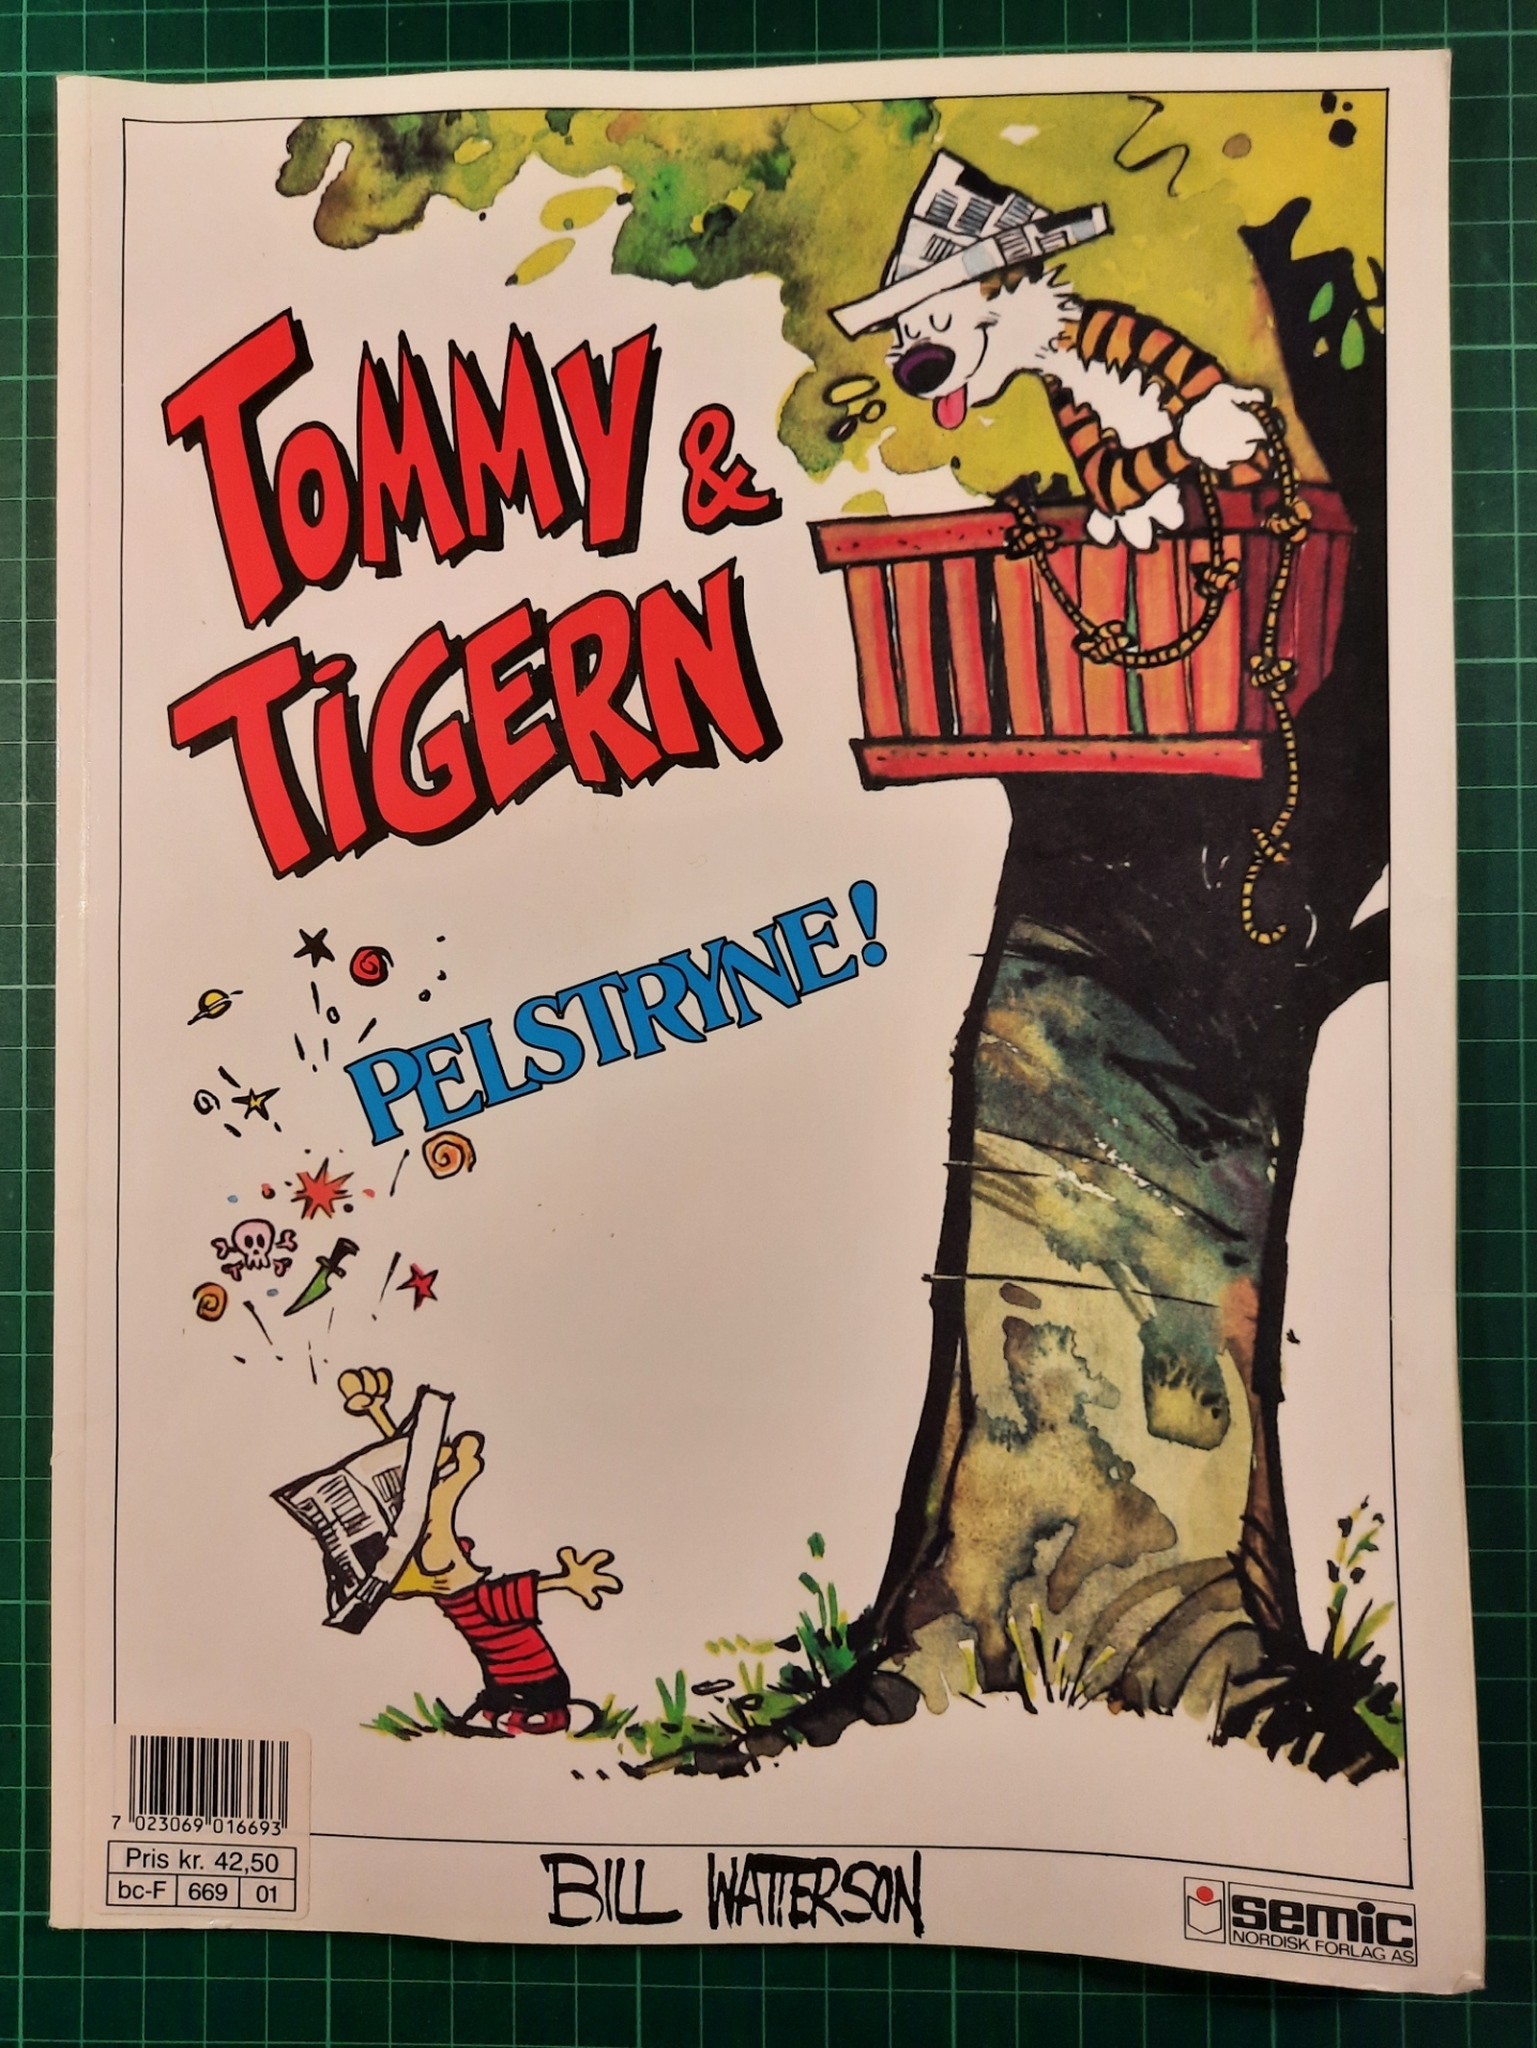 Tommy & Tigern 04 Pelstryne! (Skadet)